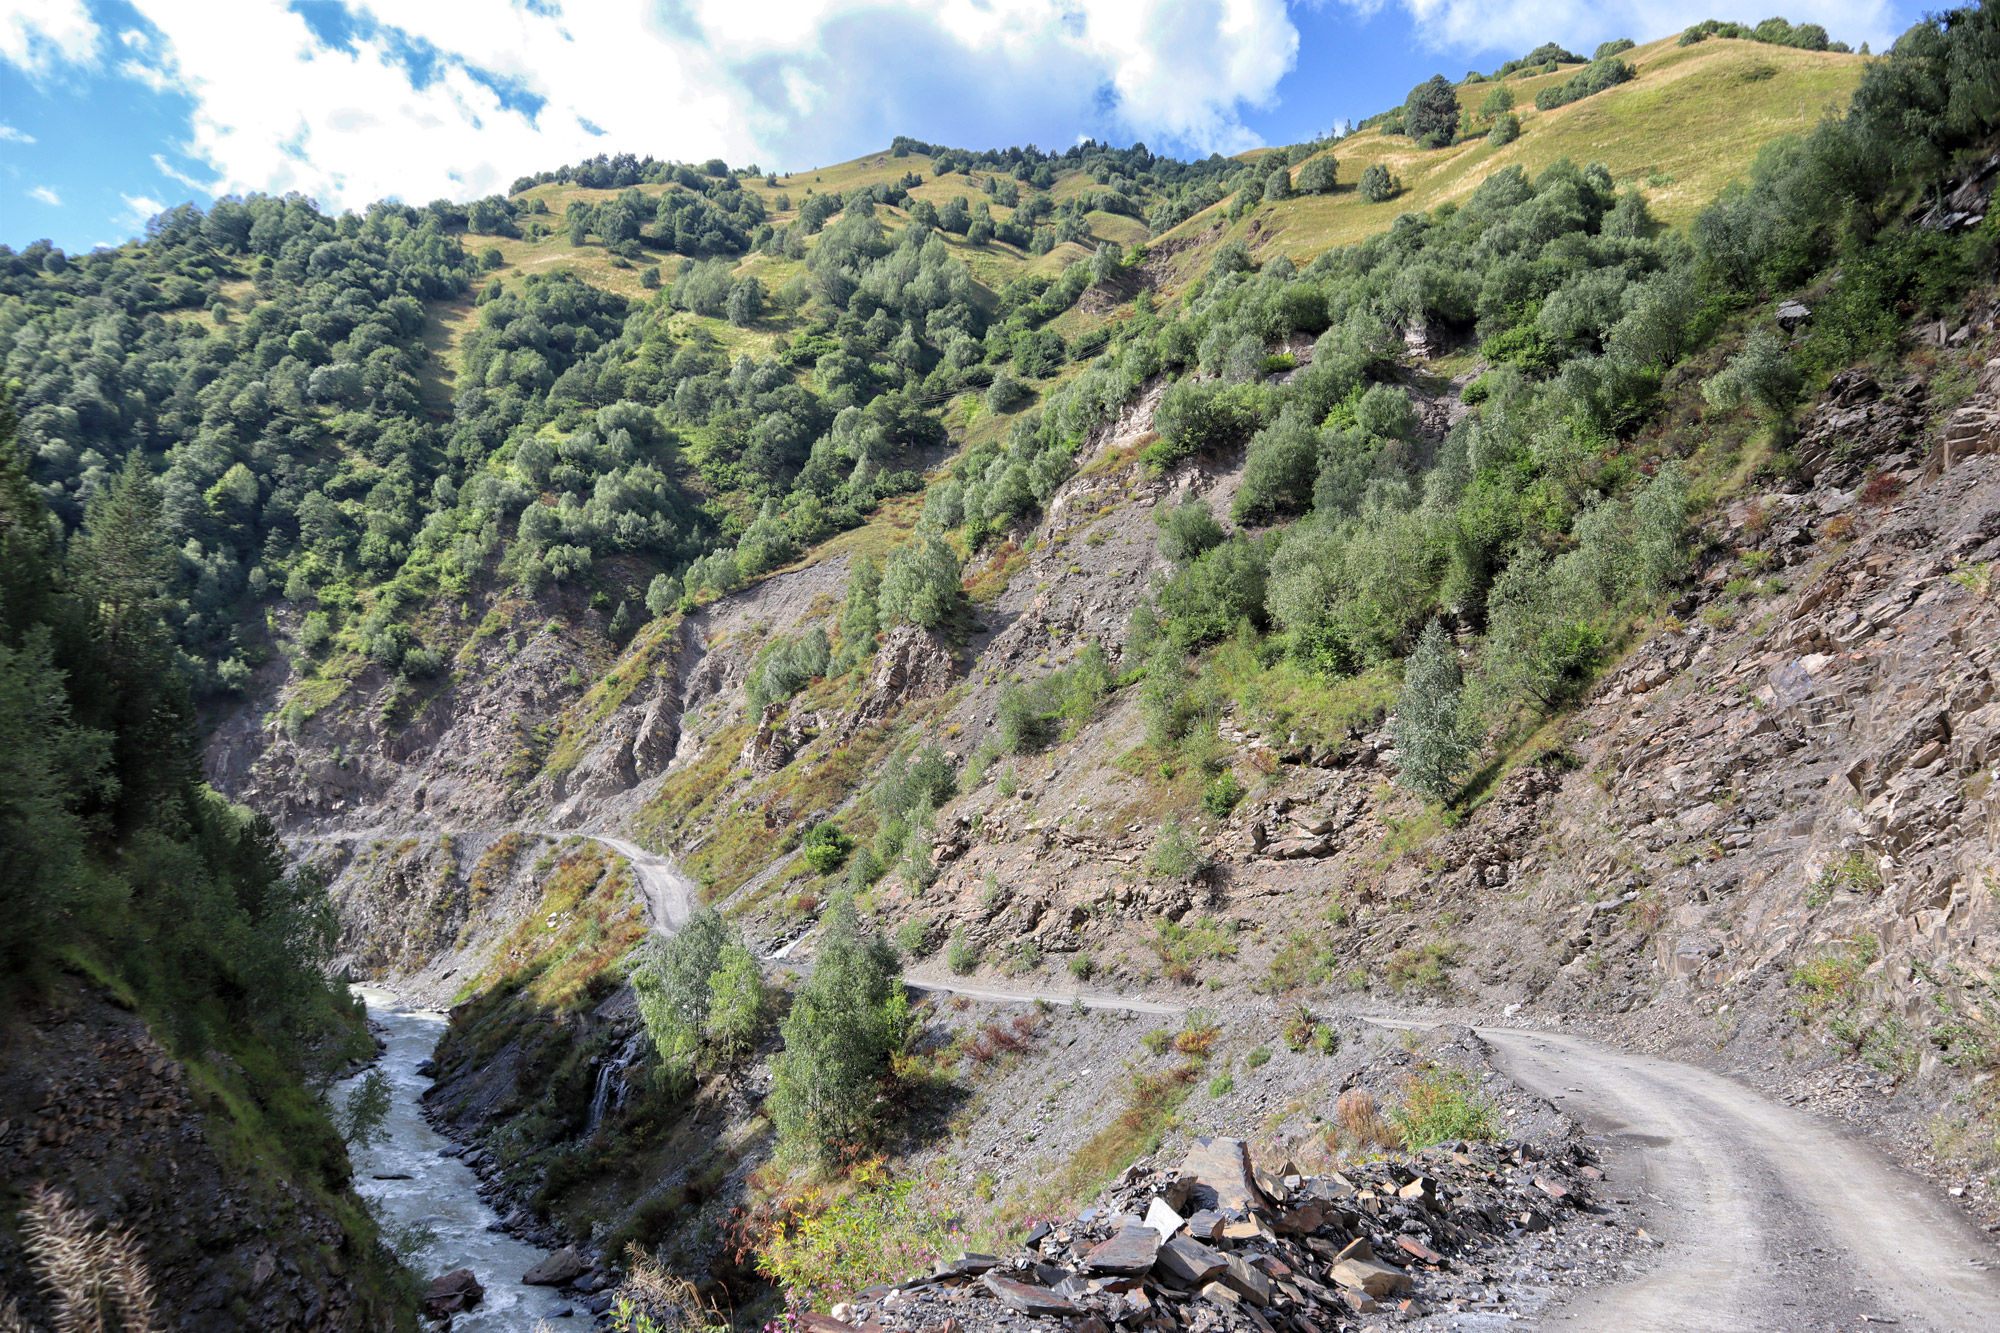 Ushguli, bijzonder bergdorp in de Kaukasus